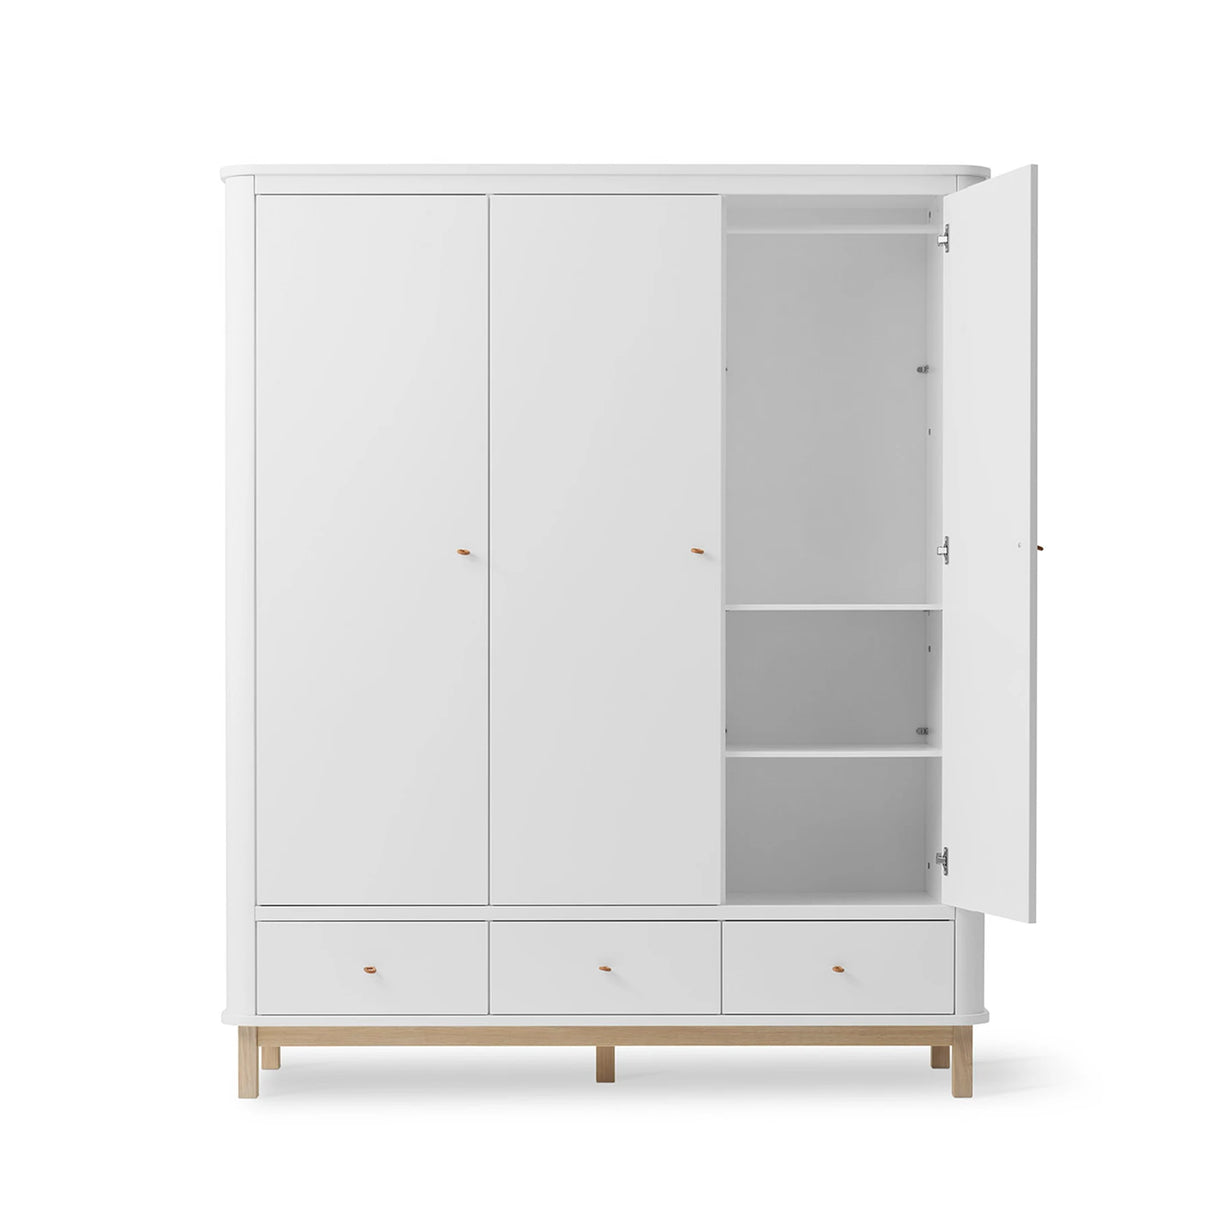 FREE Installation - Oliver Furniture Wood Wardrobe 3 Doors in White/Oak - Little Snoozes